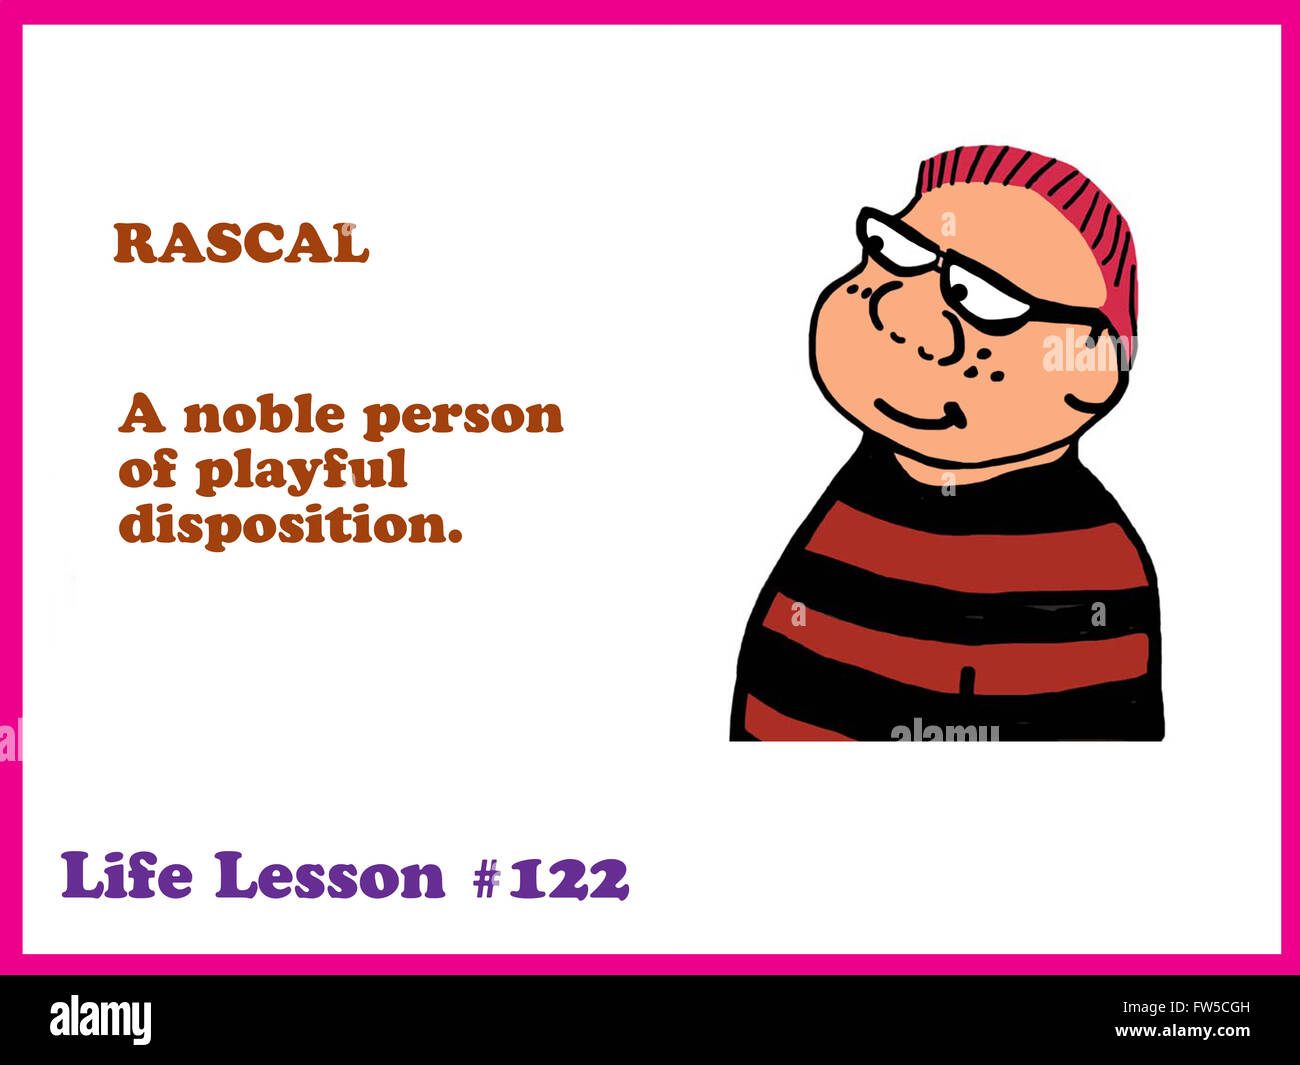 Education cartoon about a rascal. Stock Photo